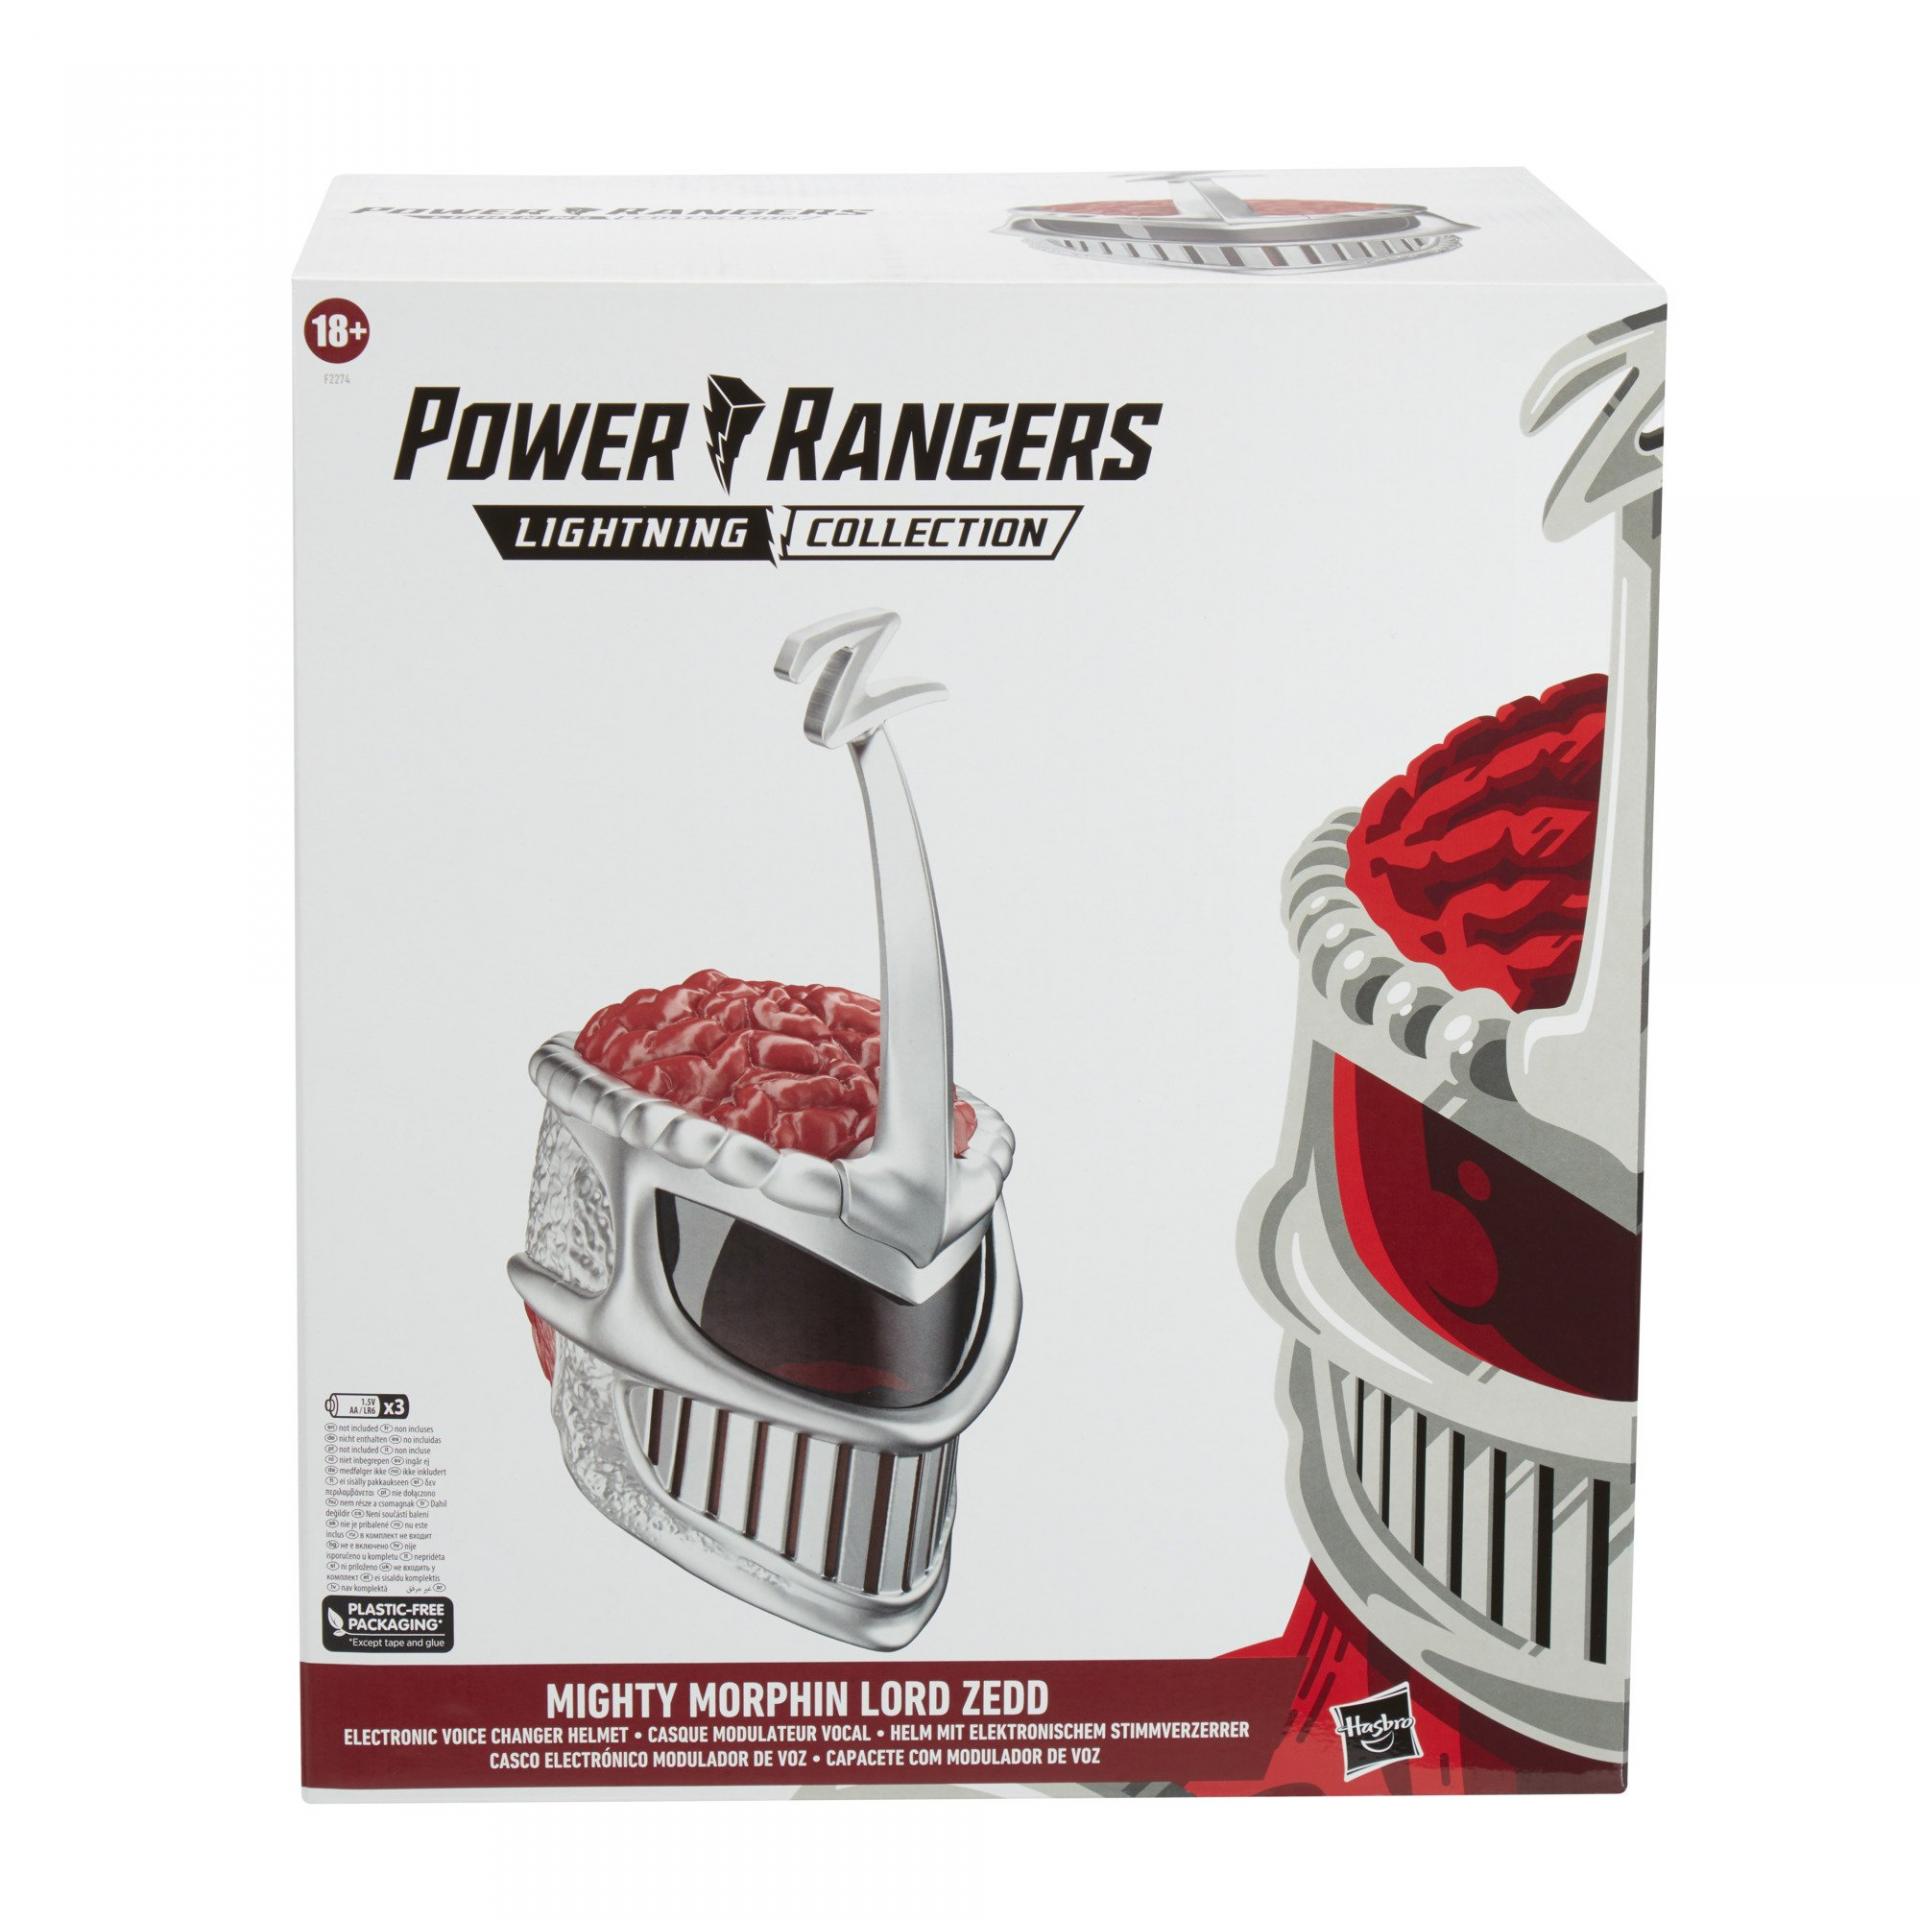 Power rangers lightning collection lord zedd helmet6